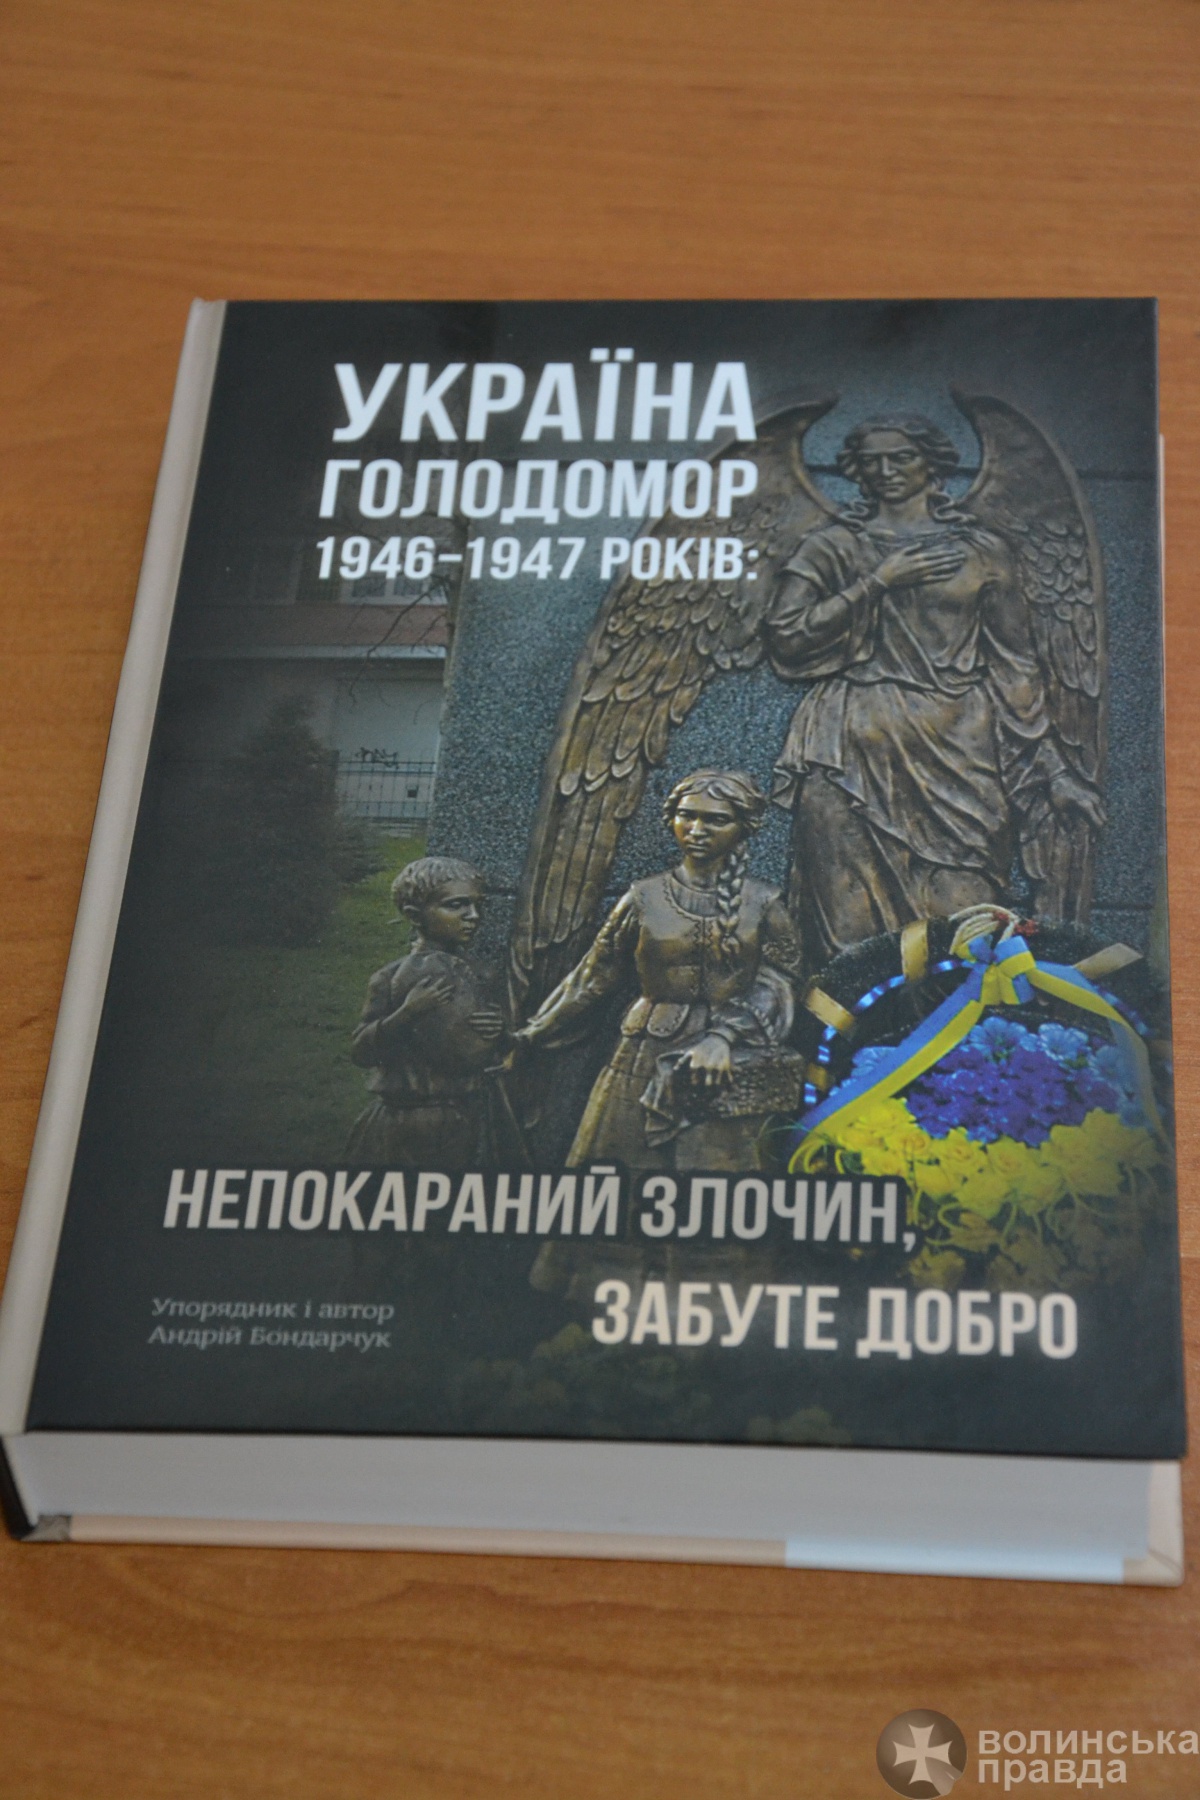 Книгу волинянина про Голодомор презентували у Києві